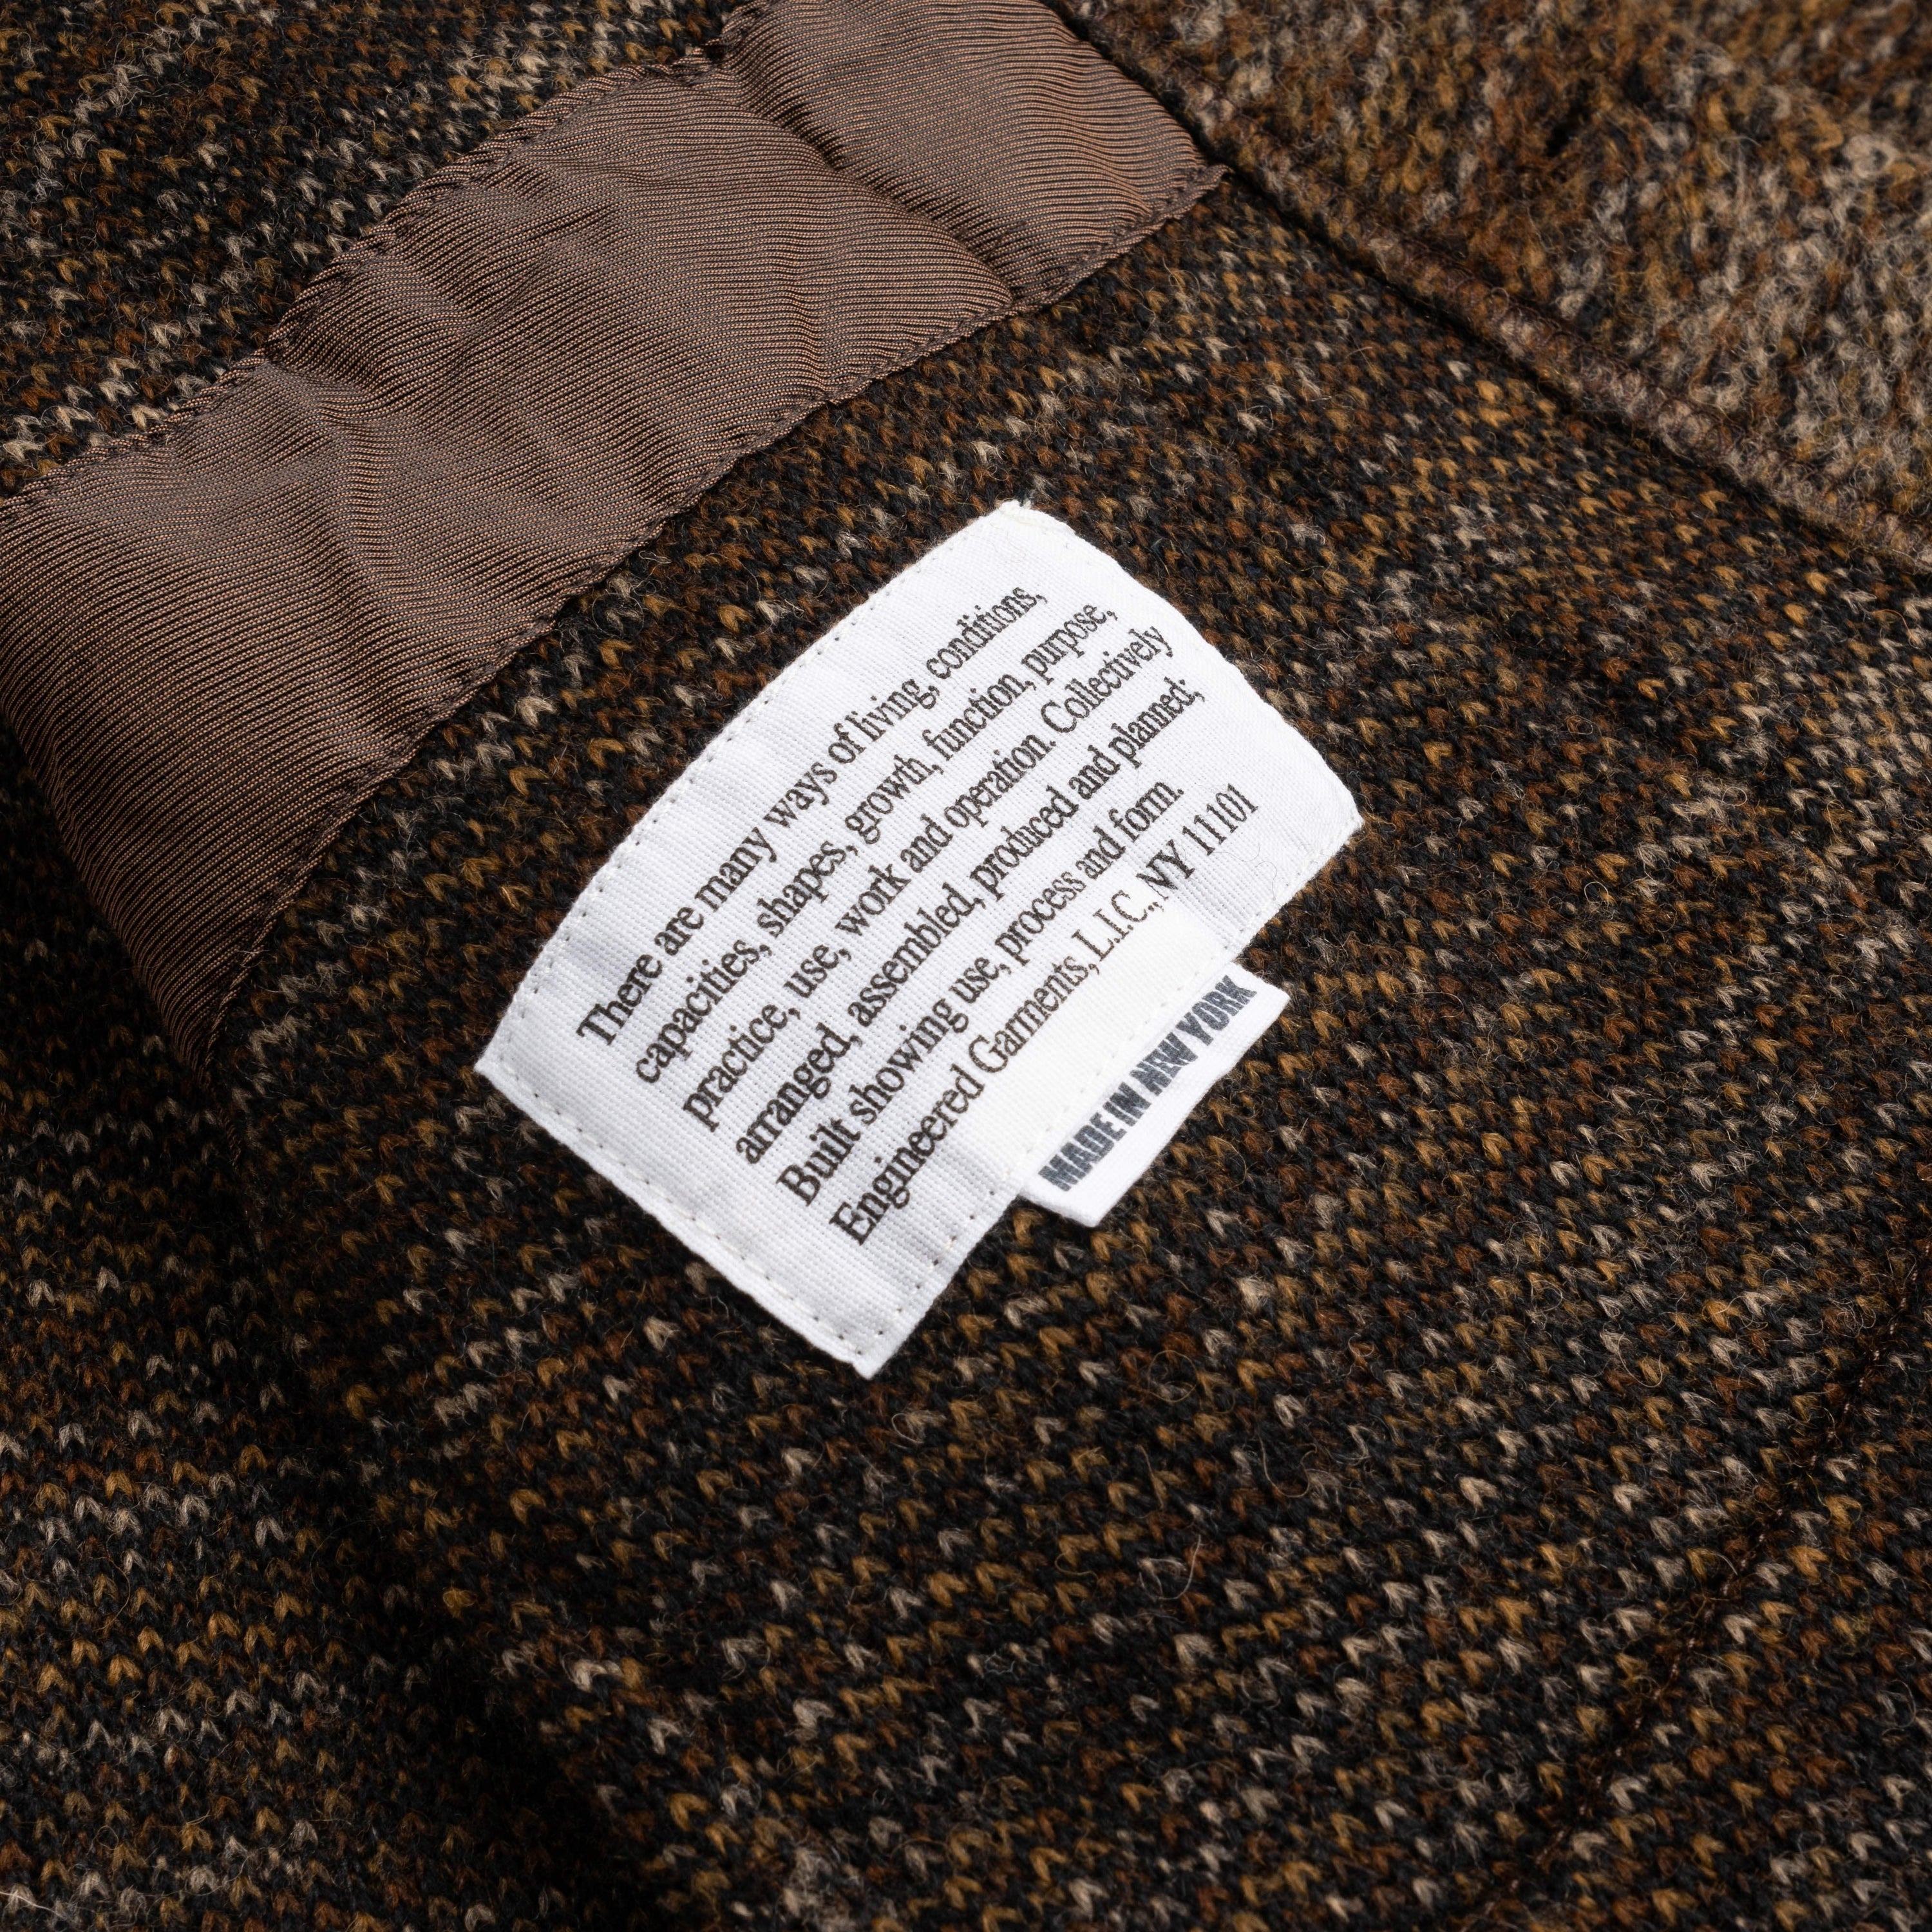 EG Knit Cardigan 23F1B030 Brown Poly/Wool Melange Knit